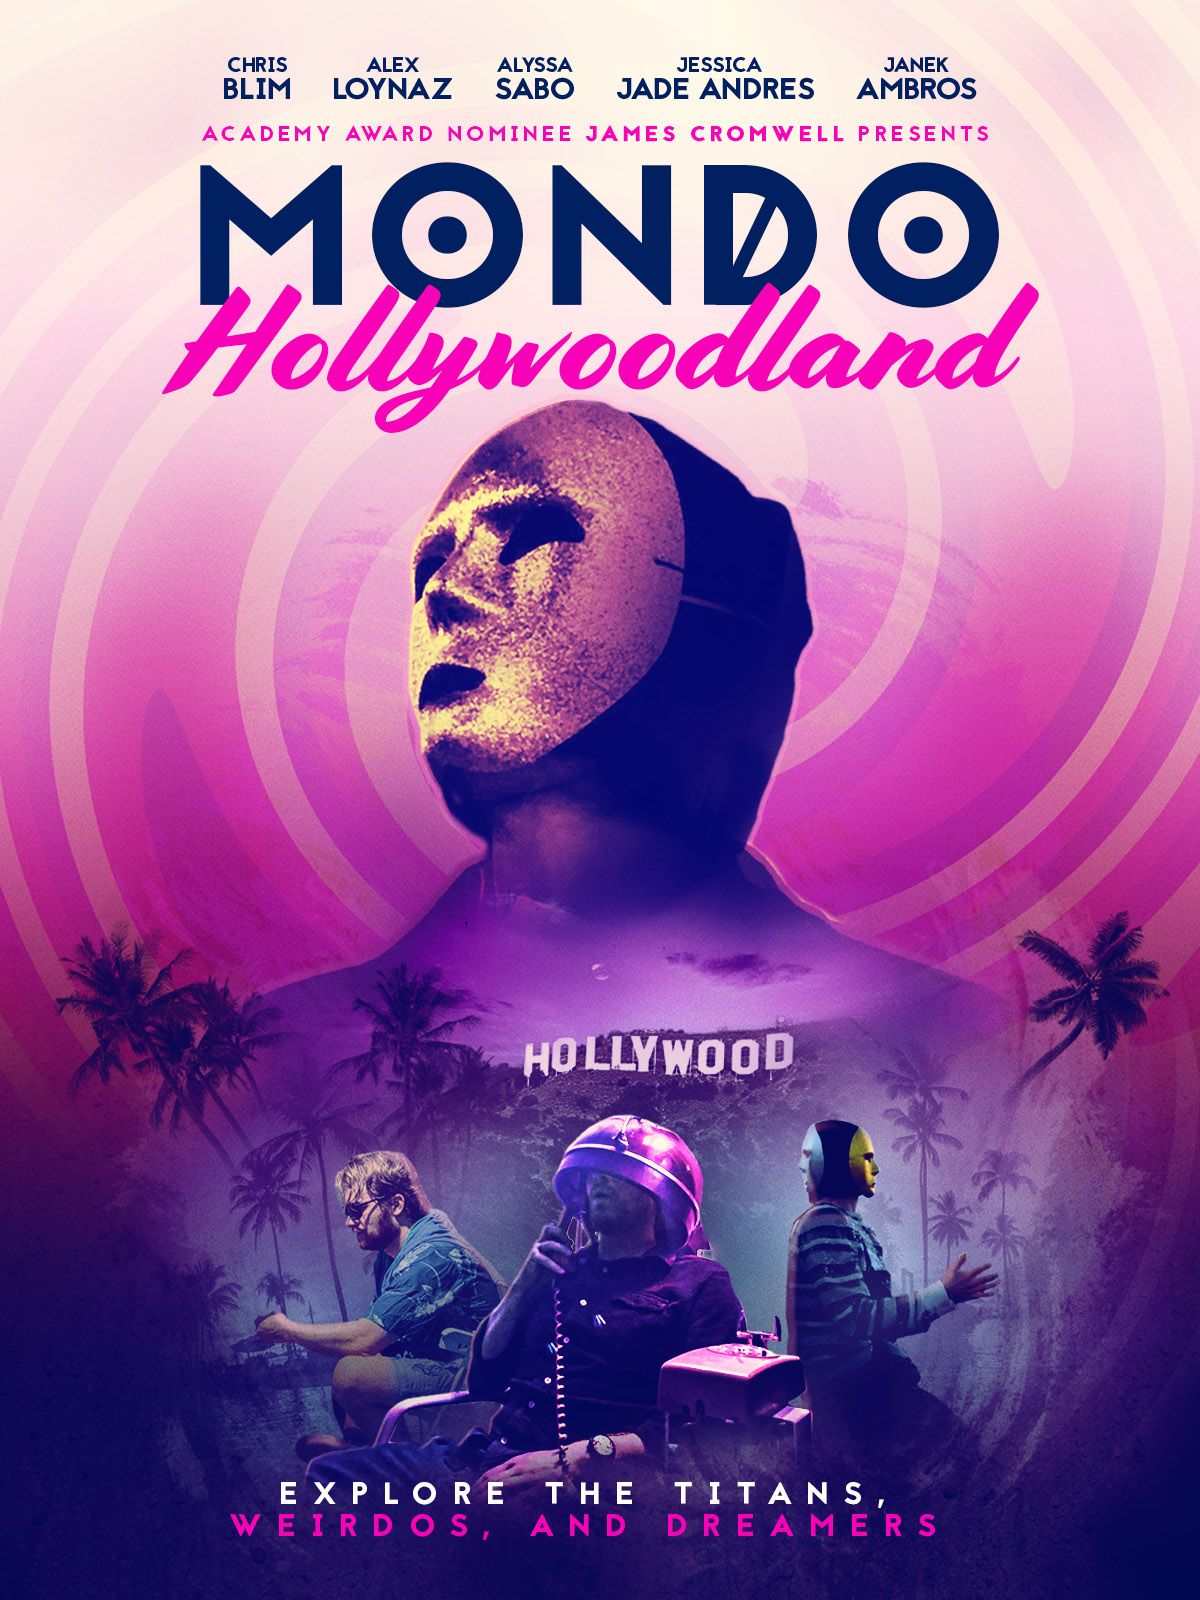 Mondo Hollywoodland keyart